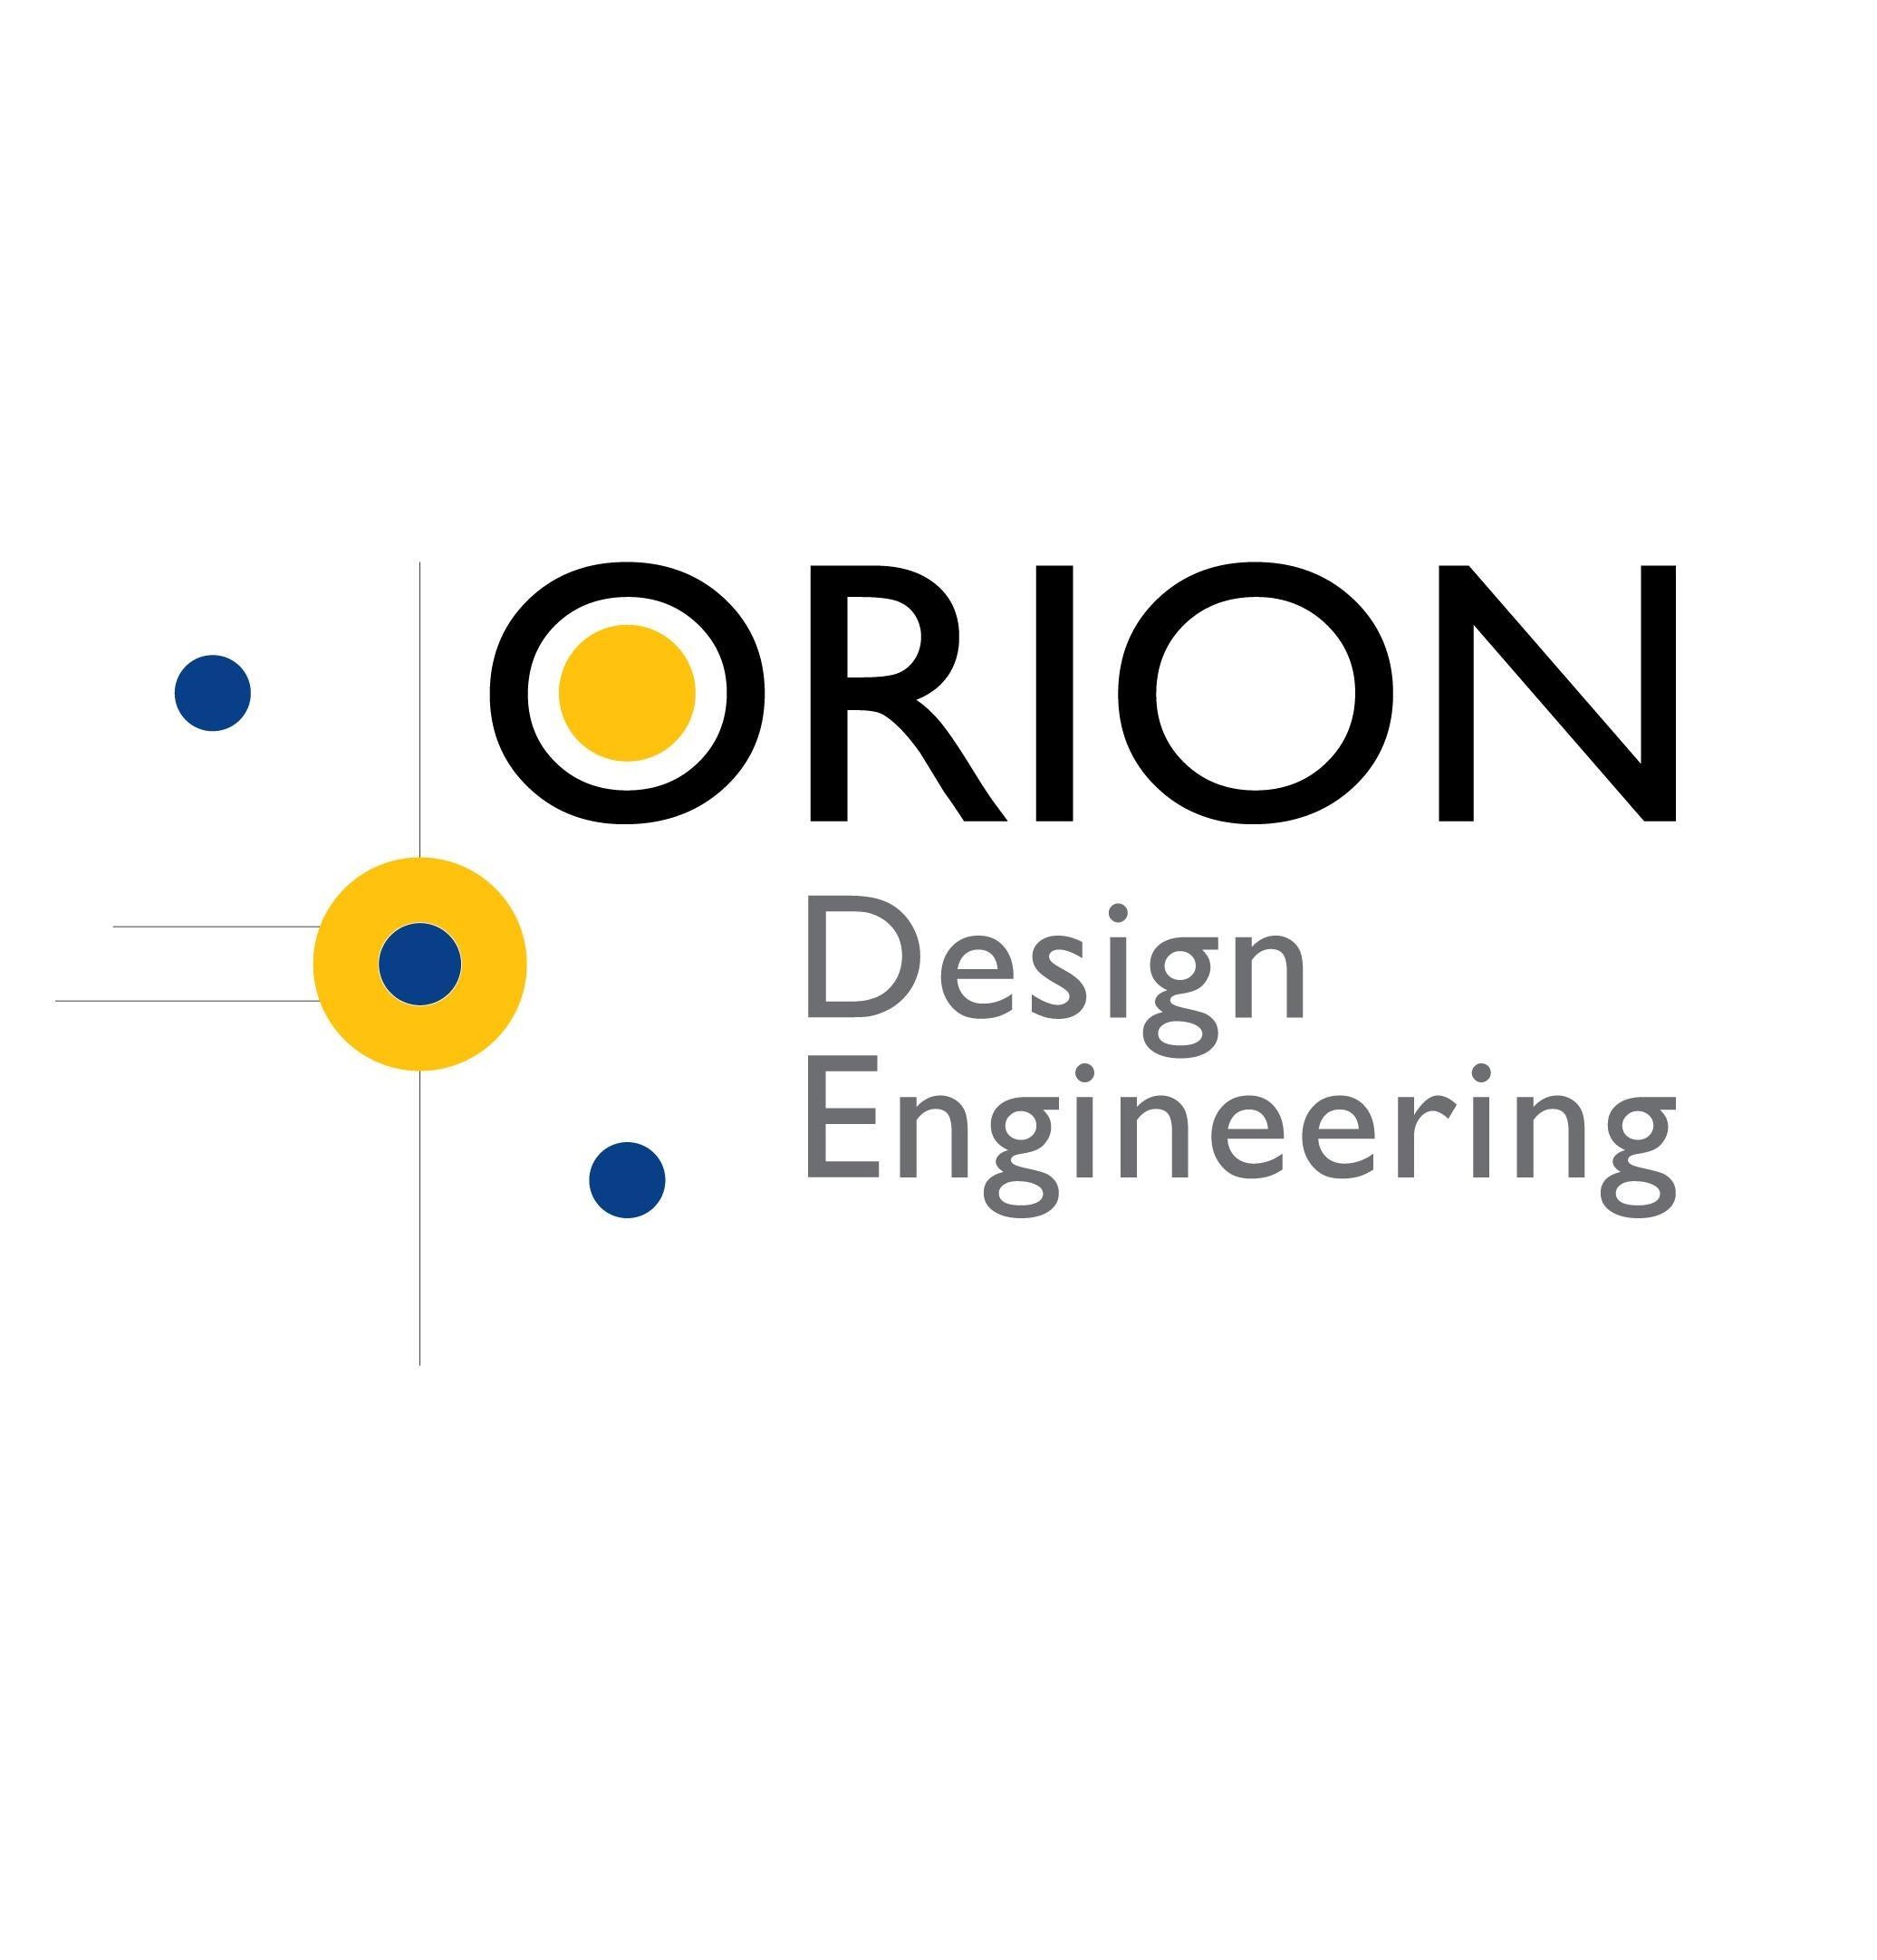 Orion Design Engineering